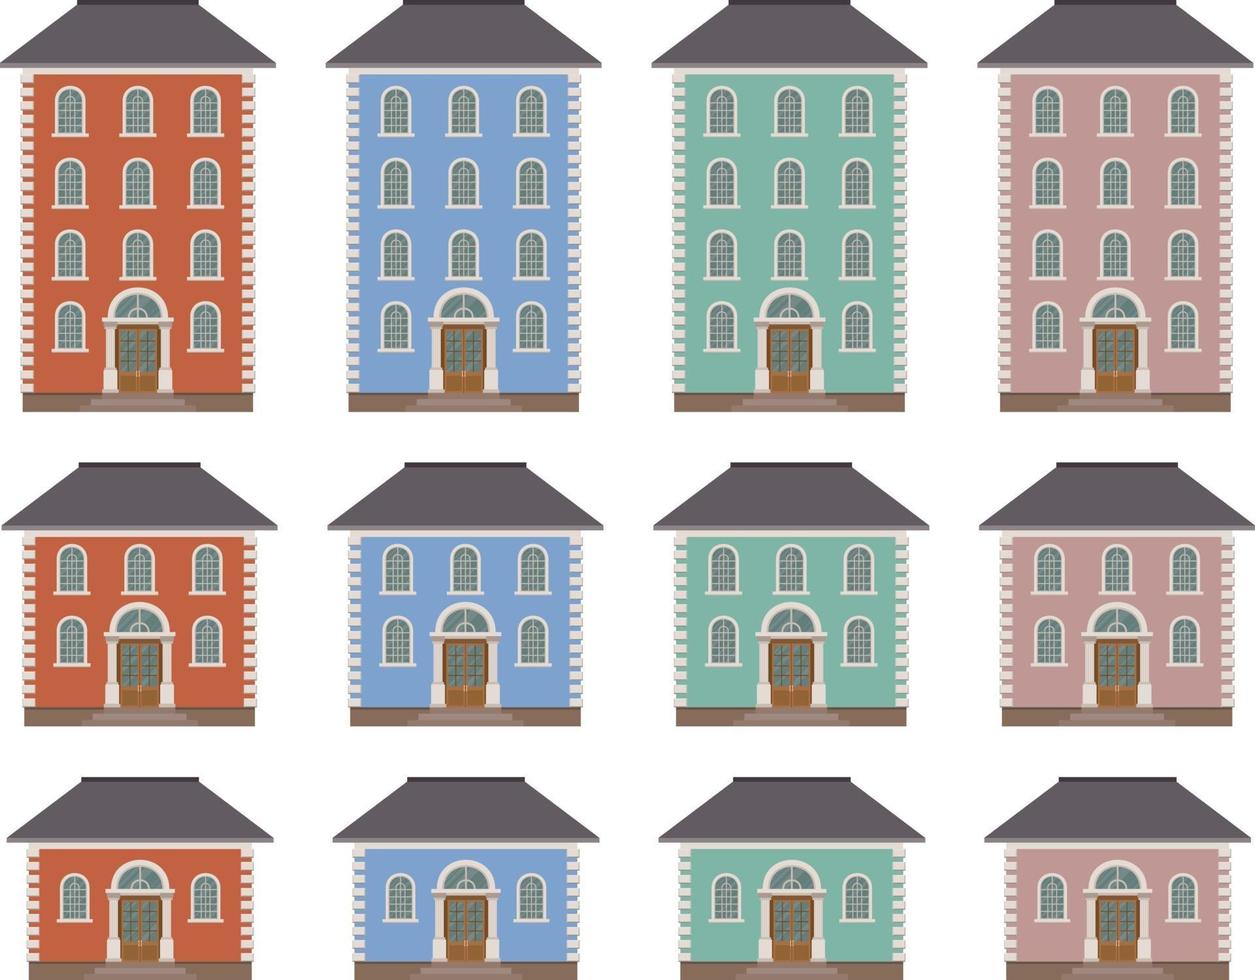 House building vector illustration isolated on white background set